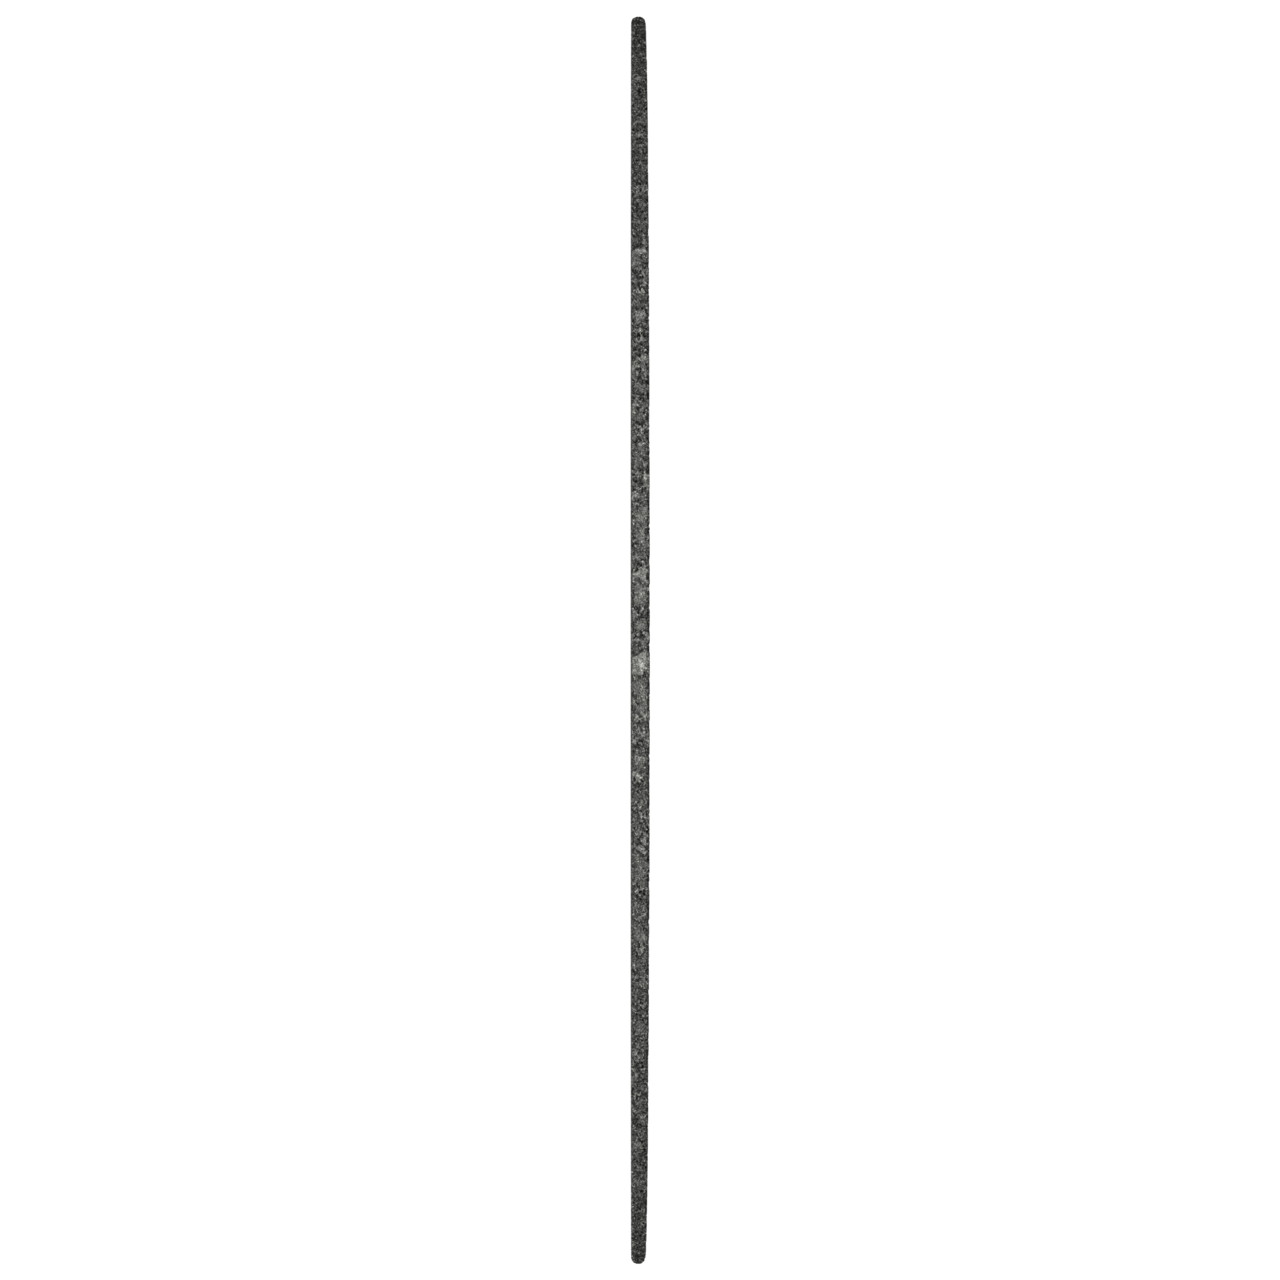 Dischi da taglio Tyrolit DxDxH 75x2x8 Per acciaio inox, forma: 41 - versione diritta, Art. 325224